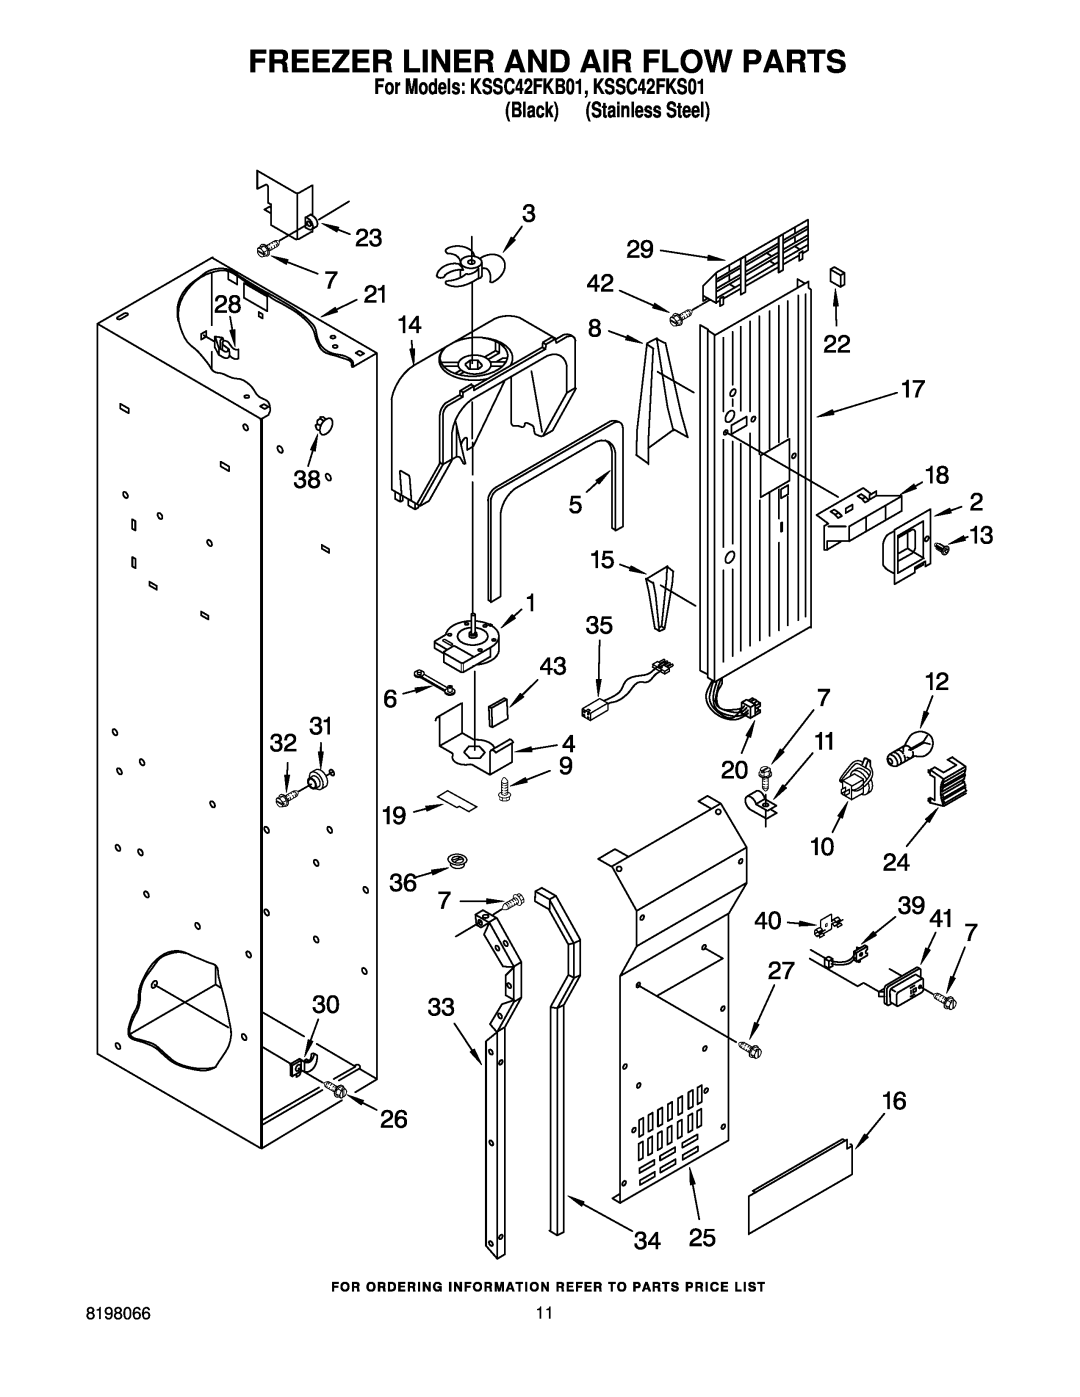 KitchenAid manual Freezer Liner And Air Flow Parts, For Models KSSC42FKB01, KSSC42FKS01 Black Stainless Steel 